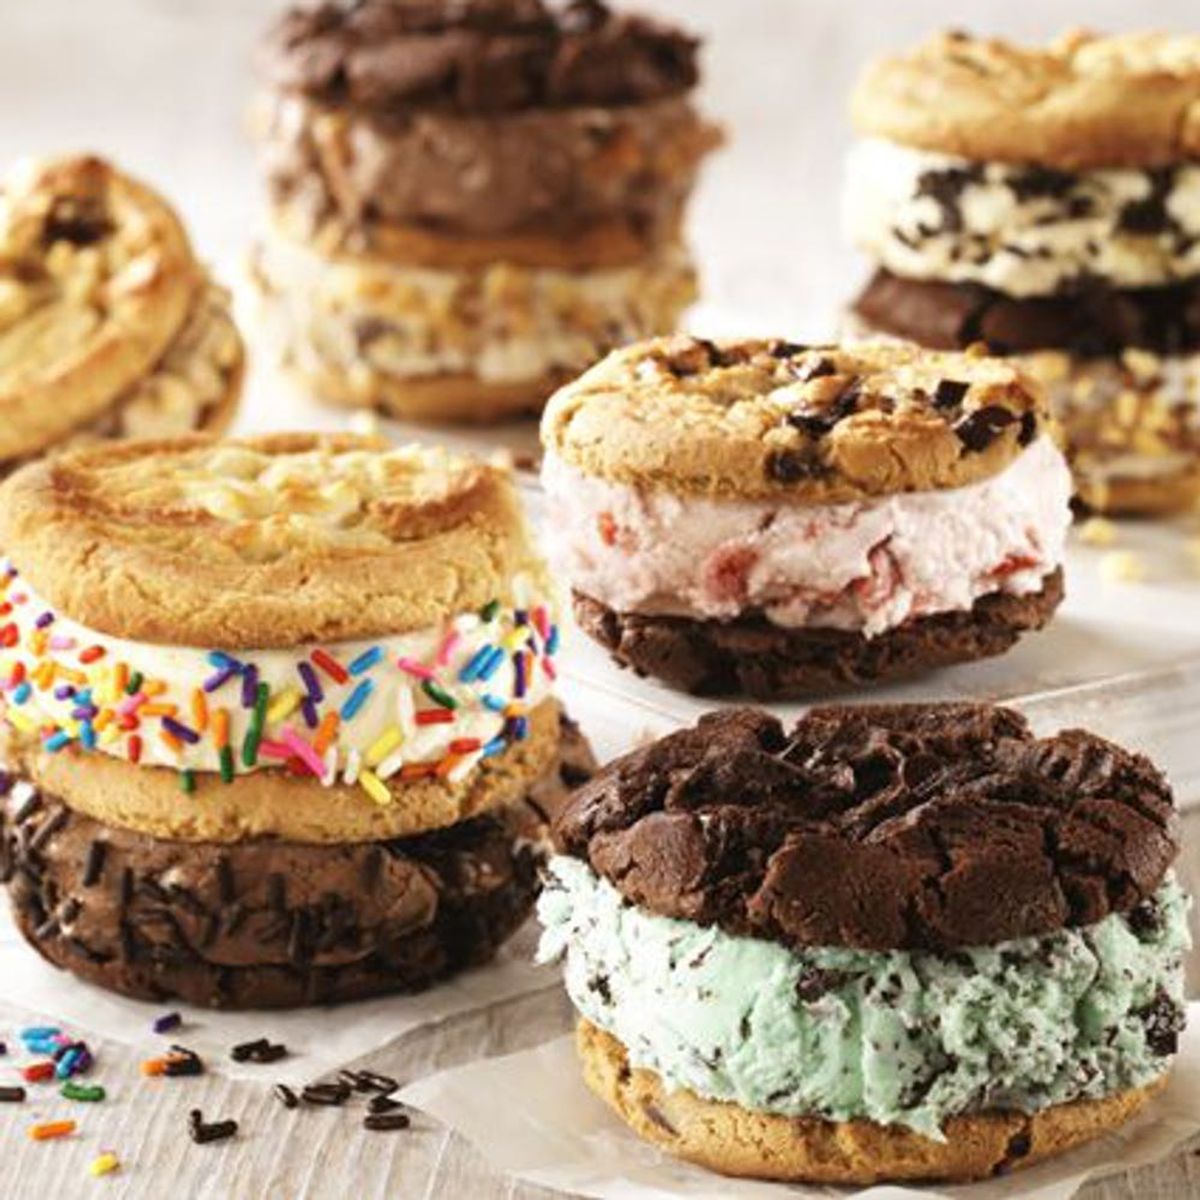 Baskin-Robbins’ New Cookie Ice Cream Sandwiches Will Make You Crave Summer